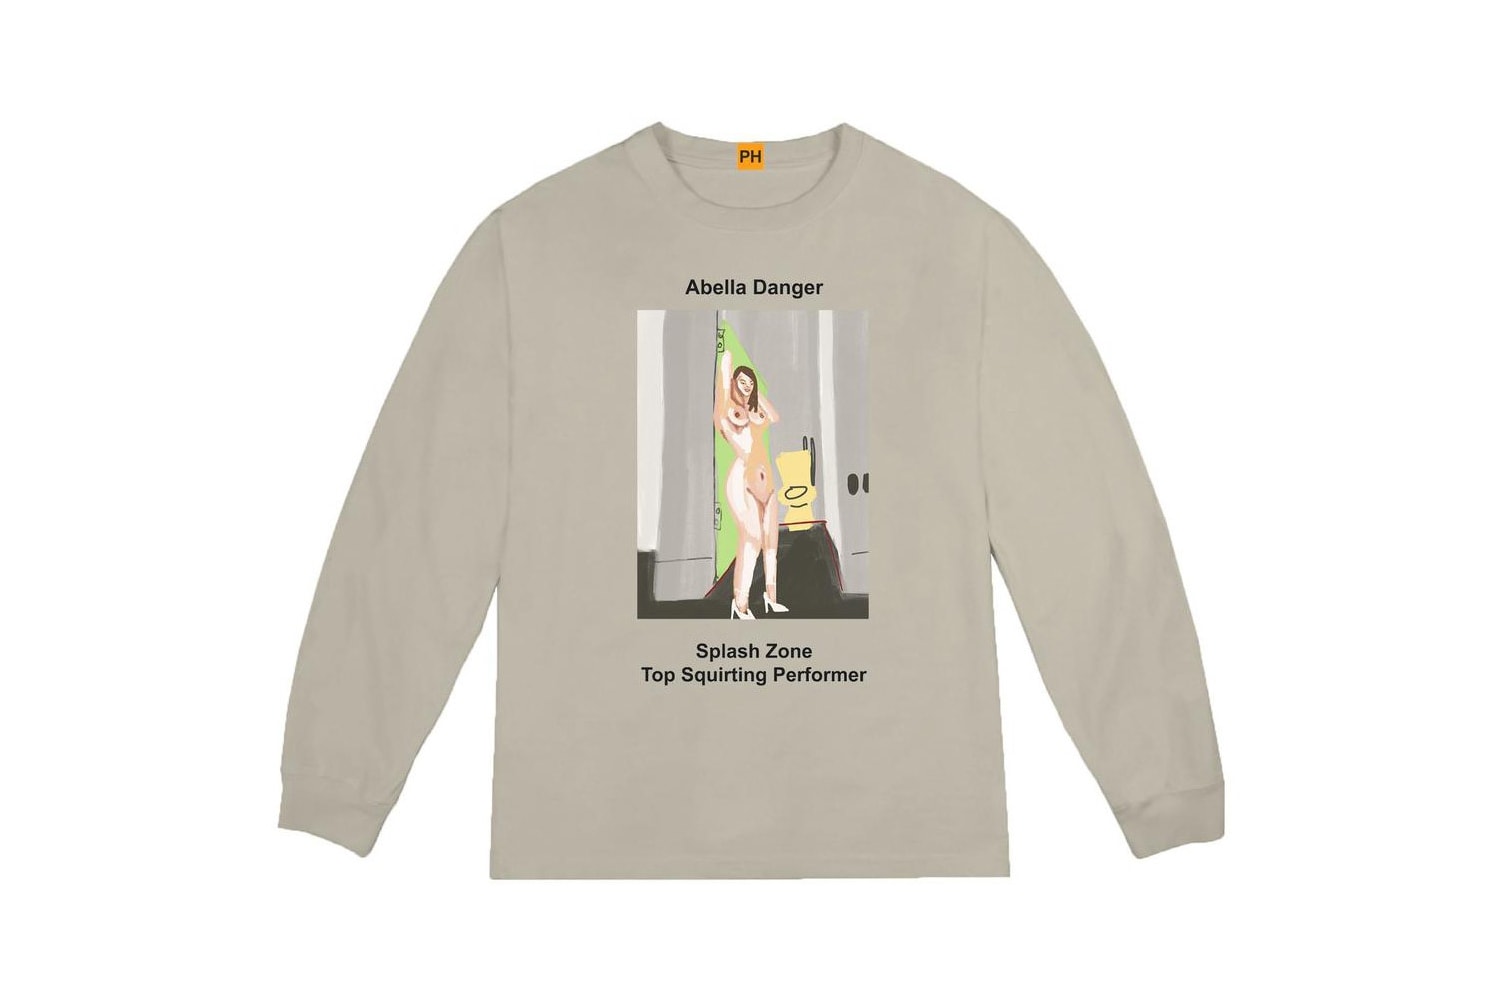 Pornhub YEEZY Kanye West Long Sleeve Shirt Abella Danger Collaboration Capsule Collection